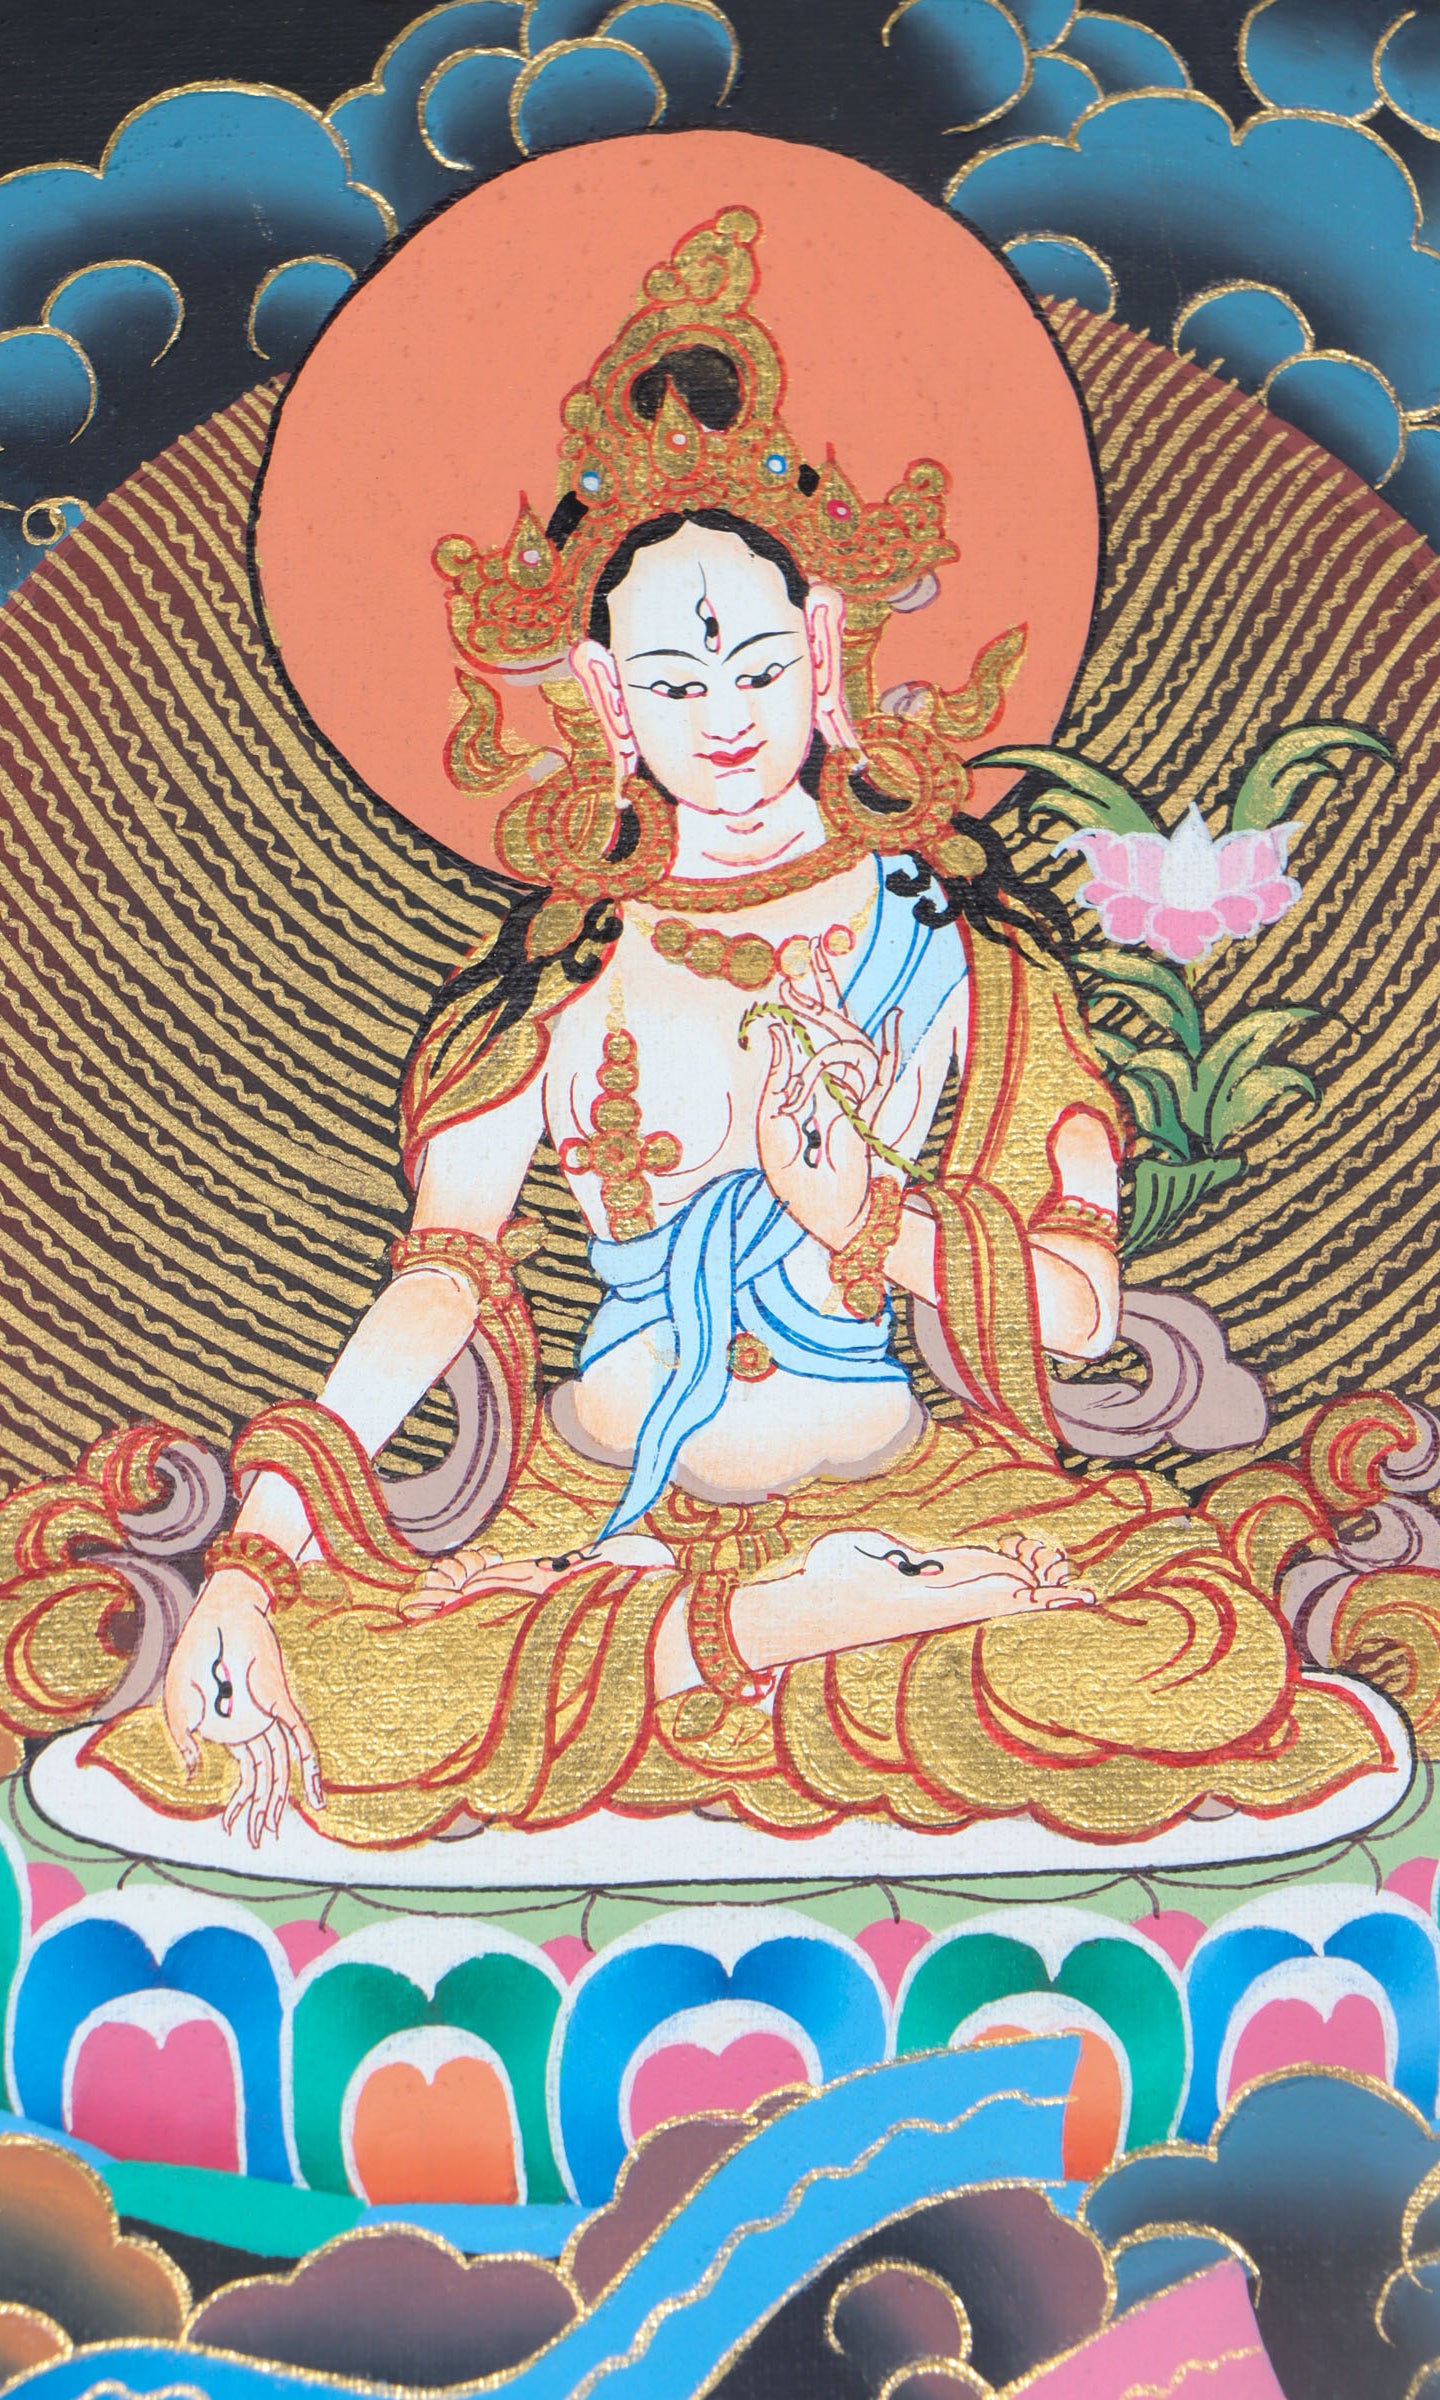 Guru Rinpoche Thangka Painting for prayer and devotion.